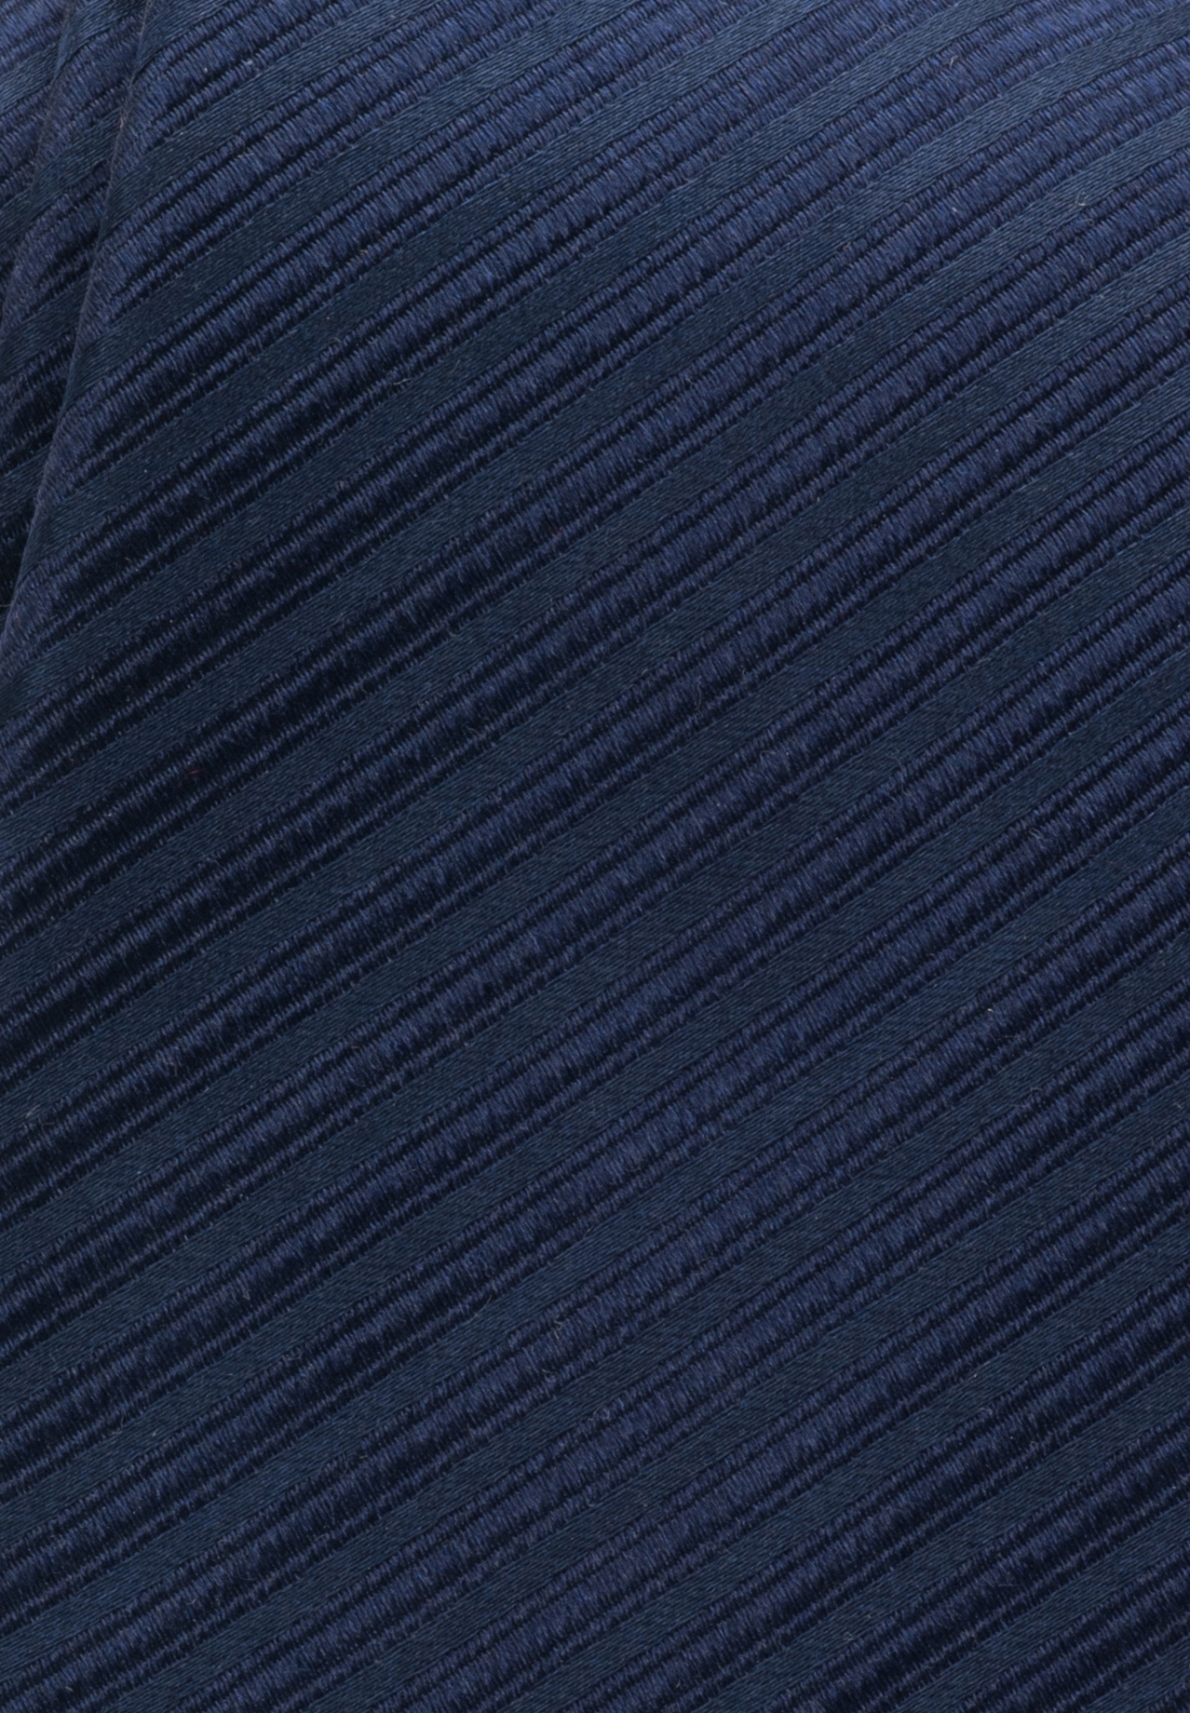 9716-19 dunkelblau Eterna gestreift SPEZIALIST Krawatte | MODE